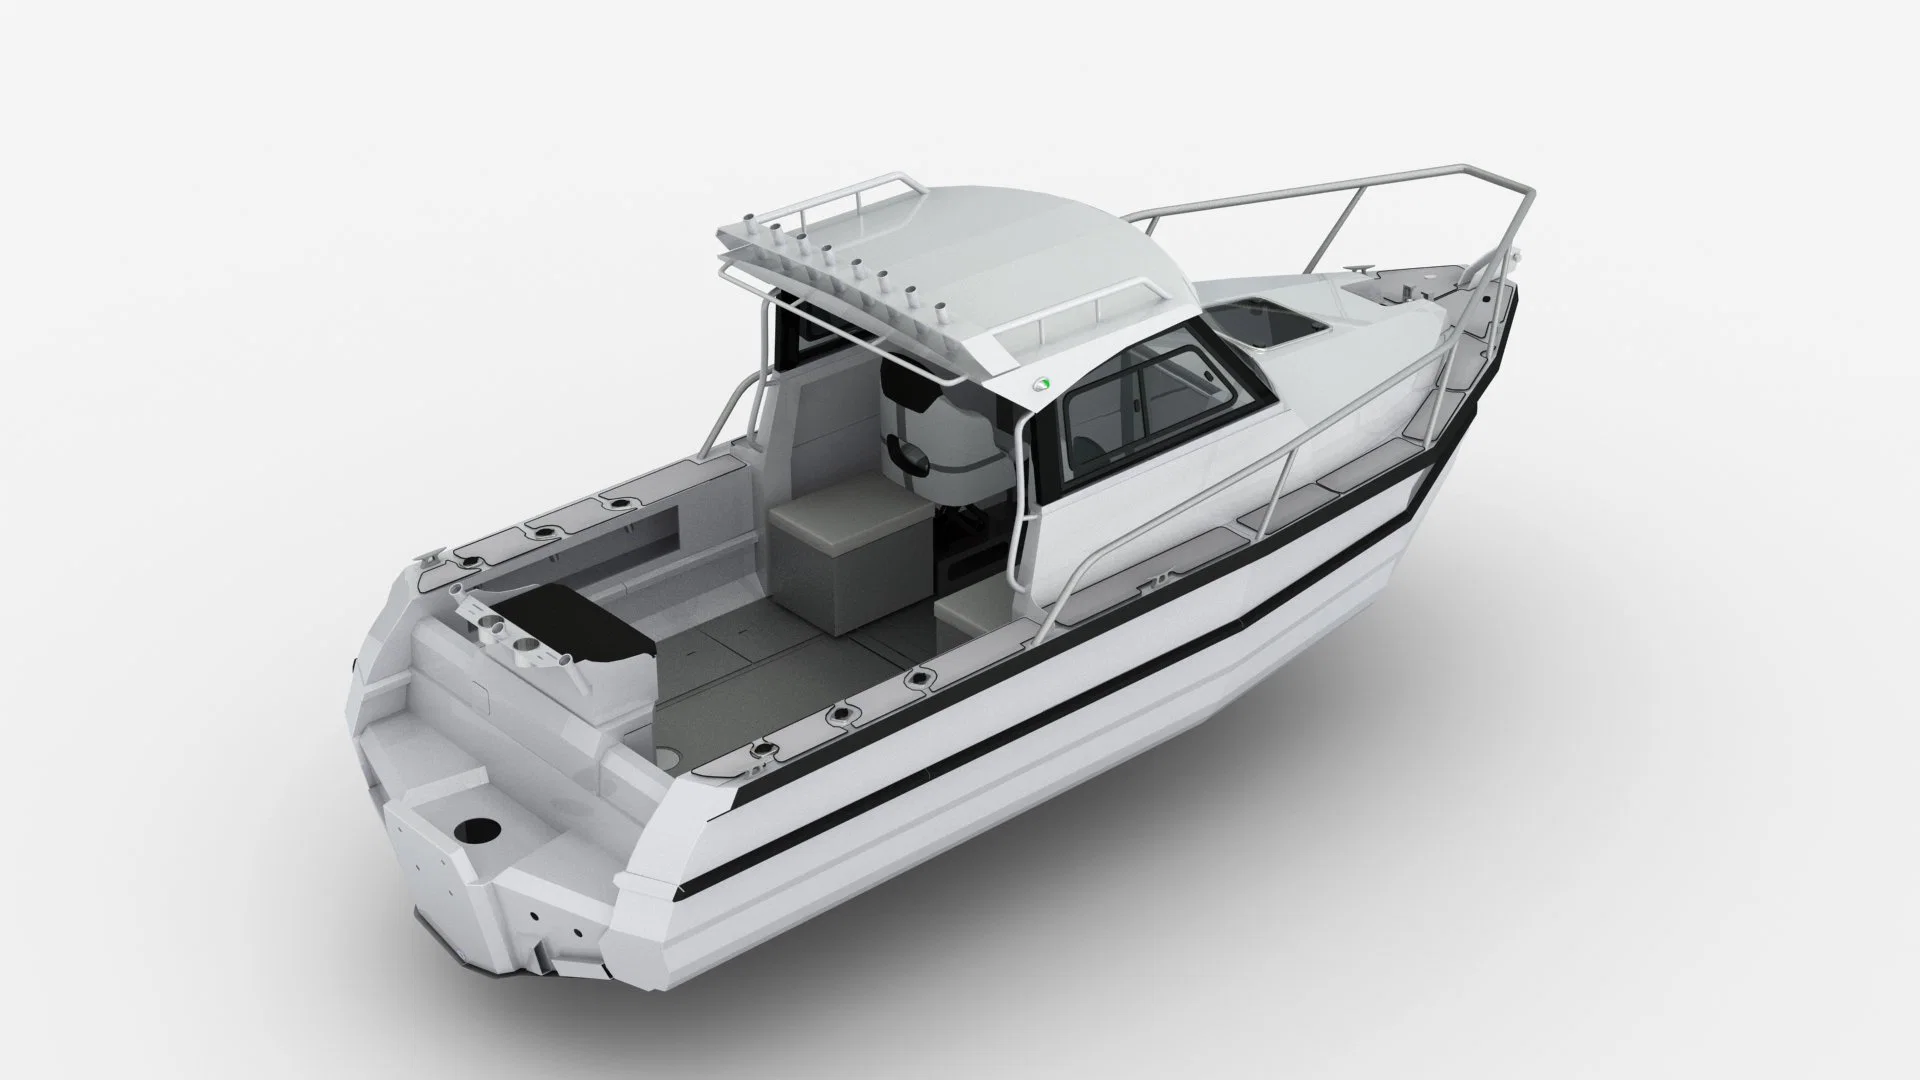 Aluminum Sport Yacht Watercraft Open Cabin Fishing Motor Boat for Leisure